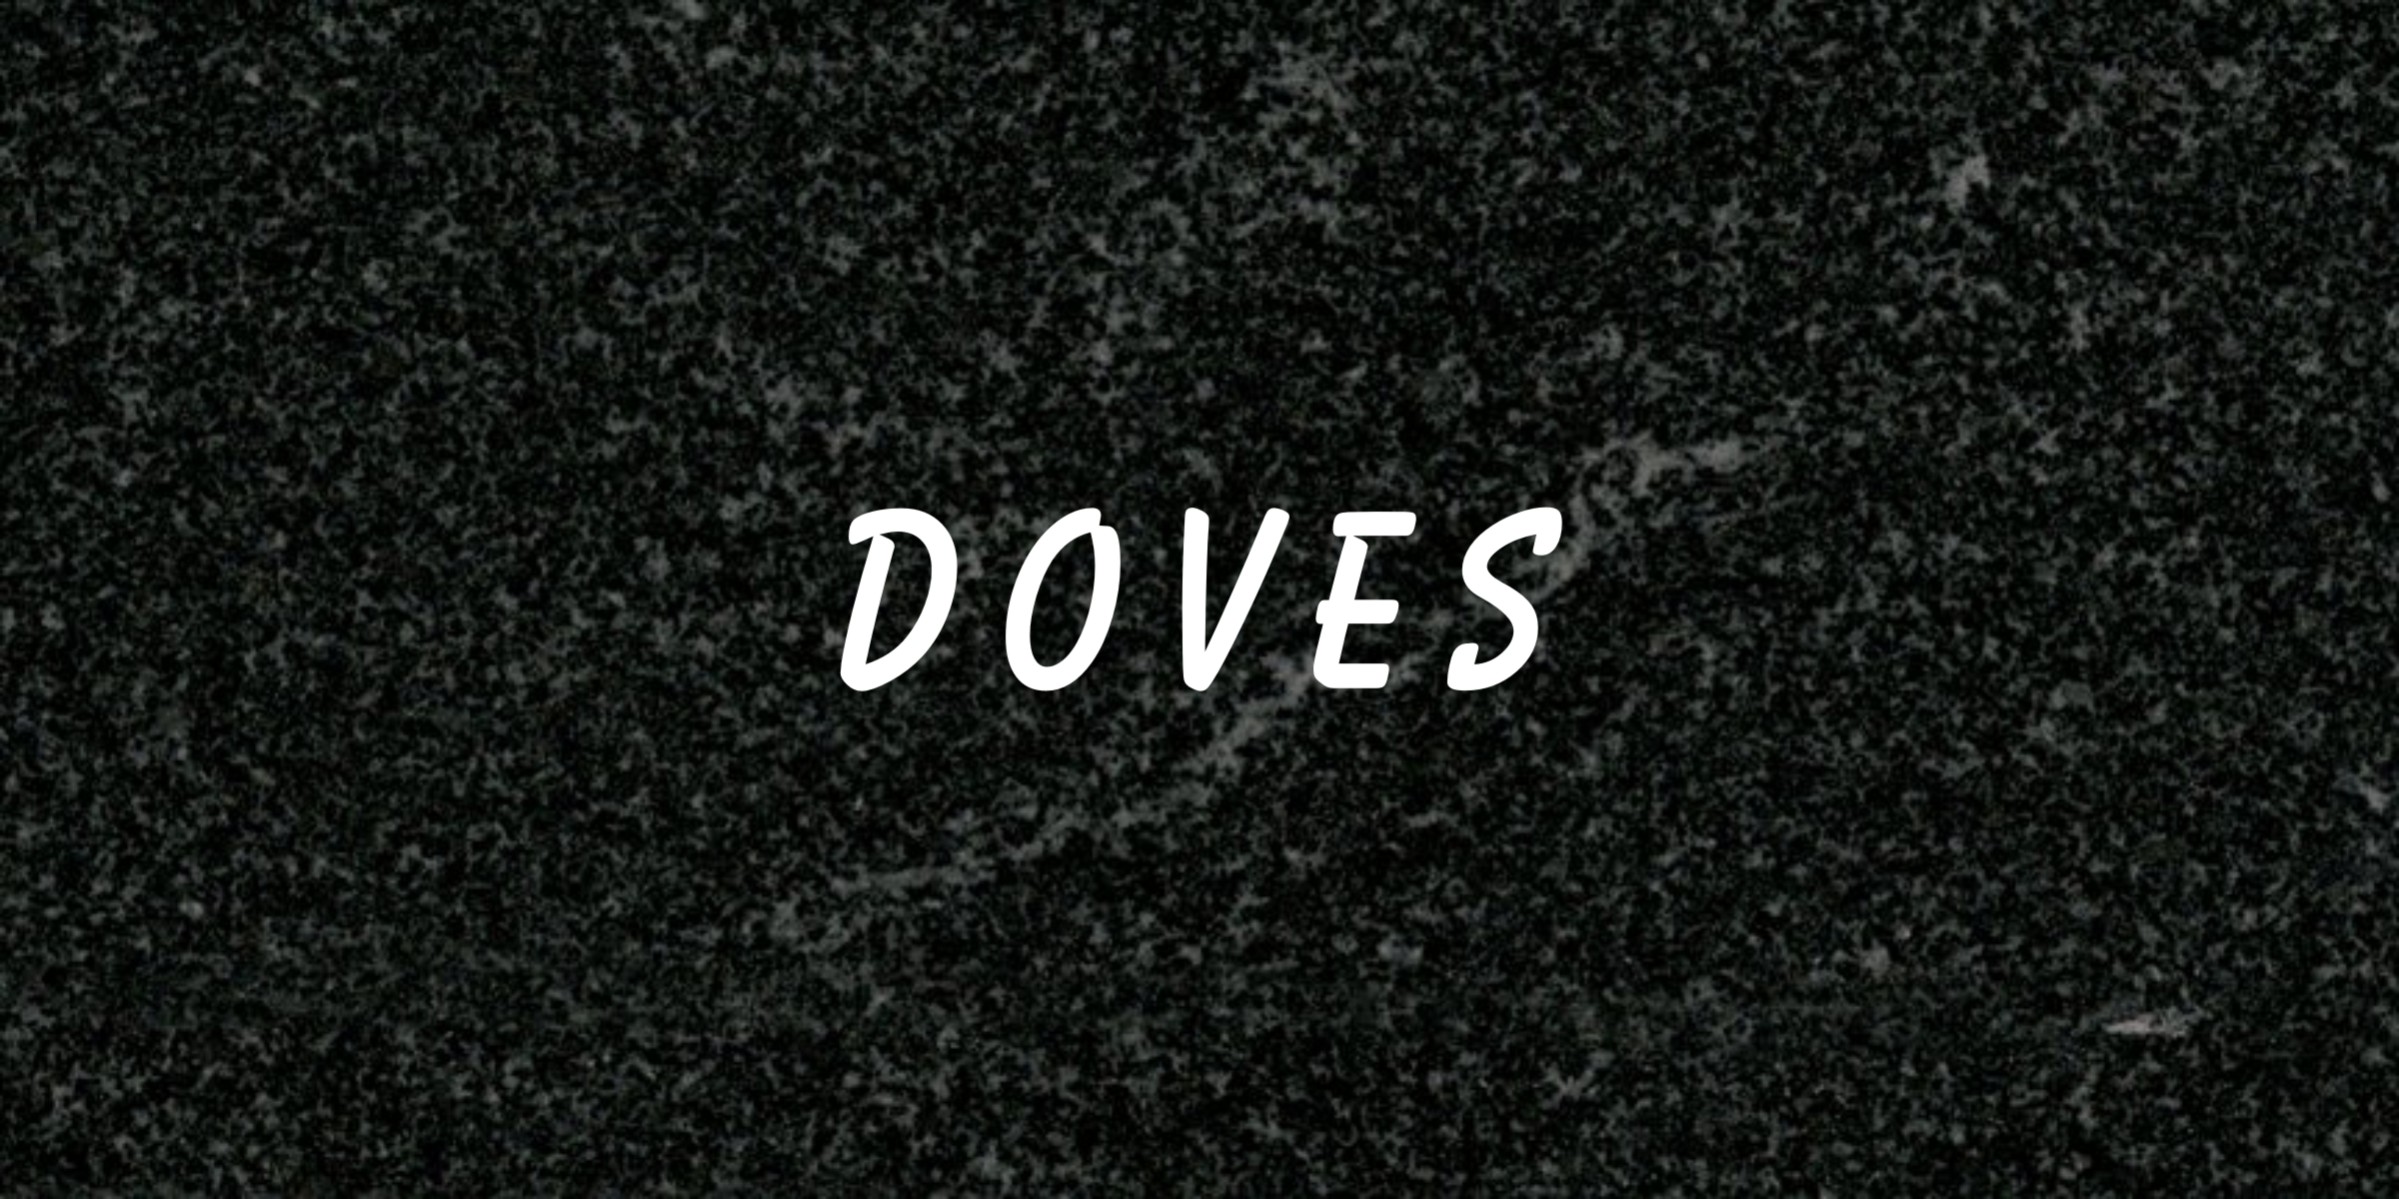 doves